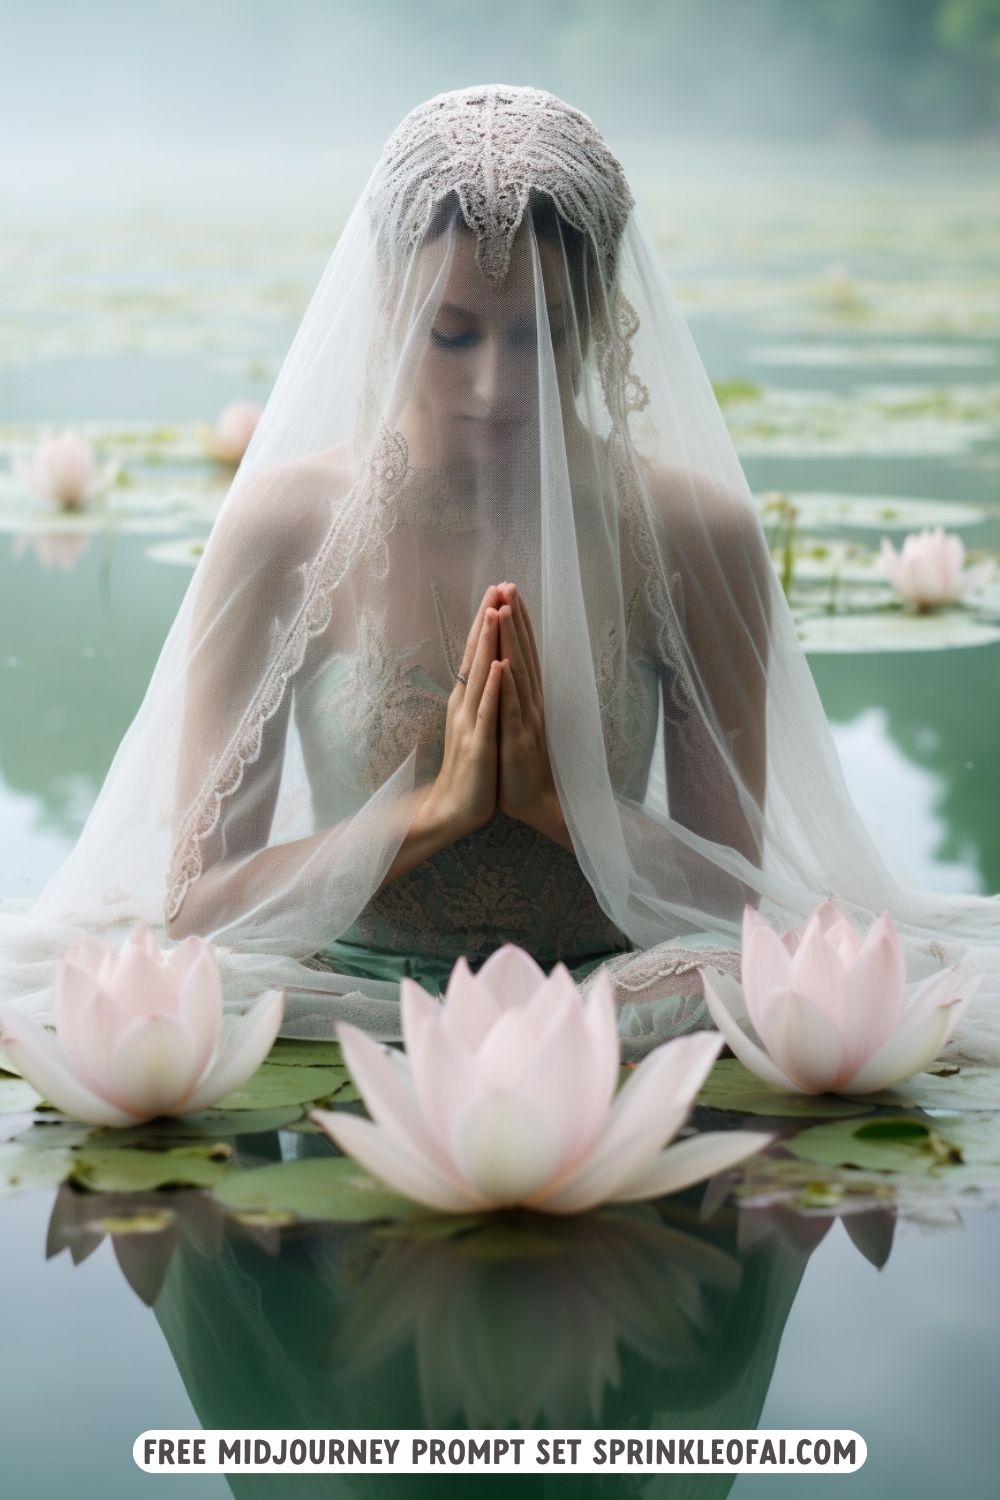 Serenity Free Midjourney Prompt Set - Yoga Mindfullness Meditation Prayer Prompts - Midjourney for Beginners - Sprinkle of AI Blog